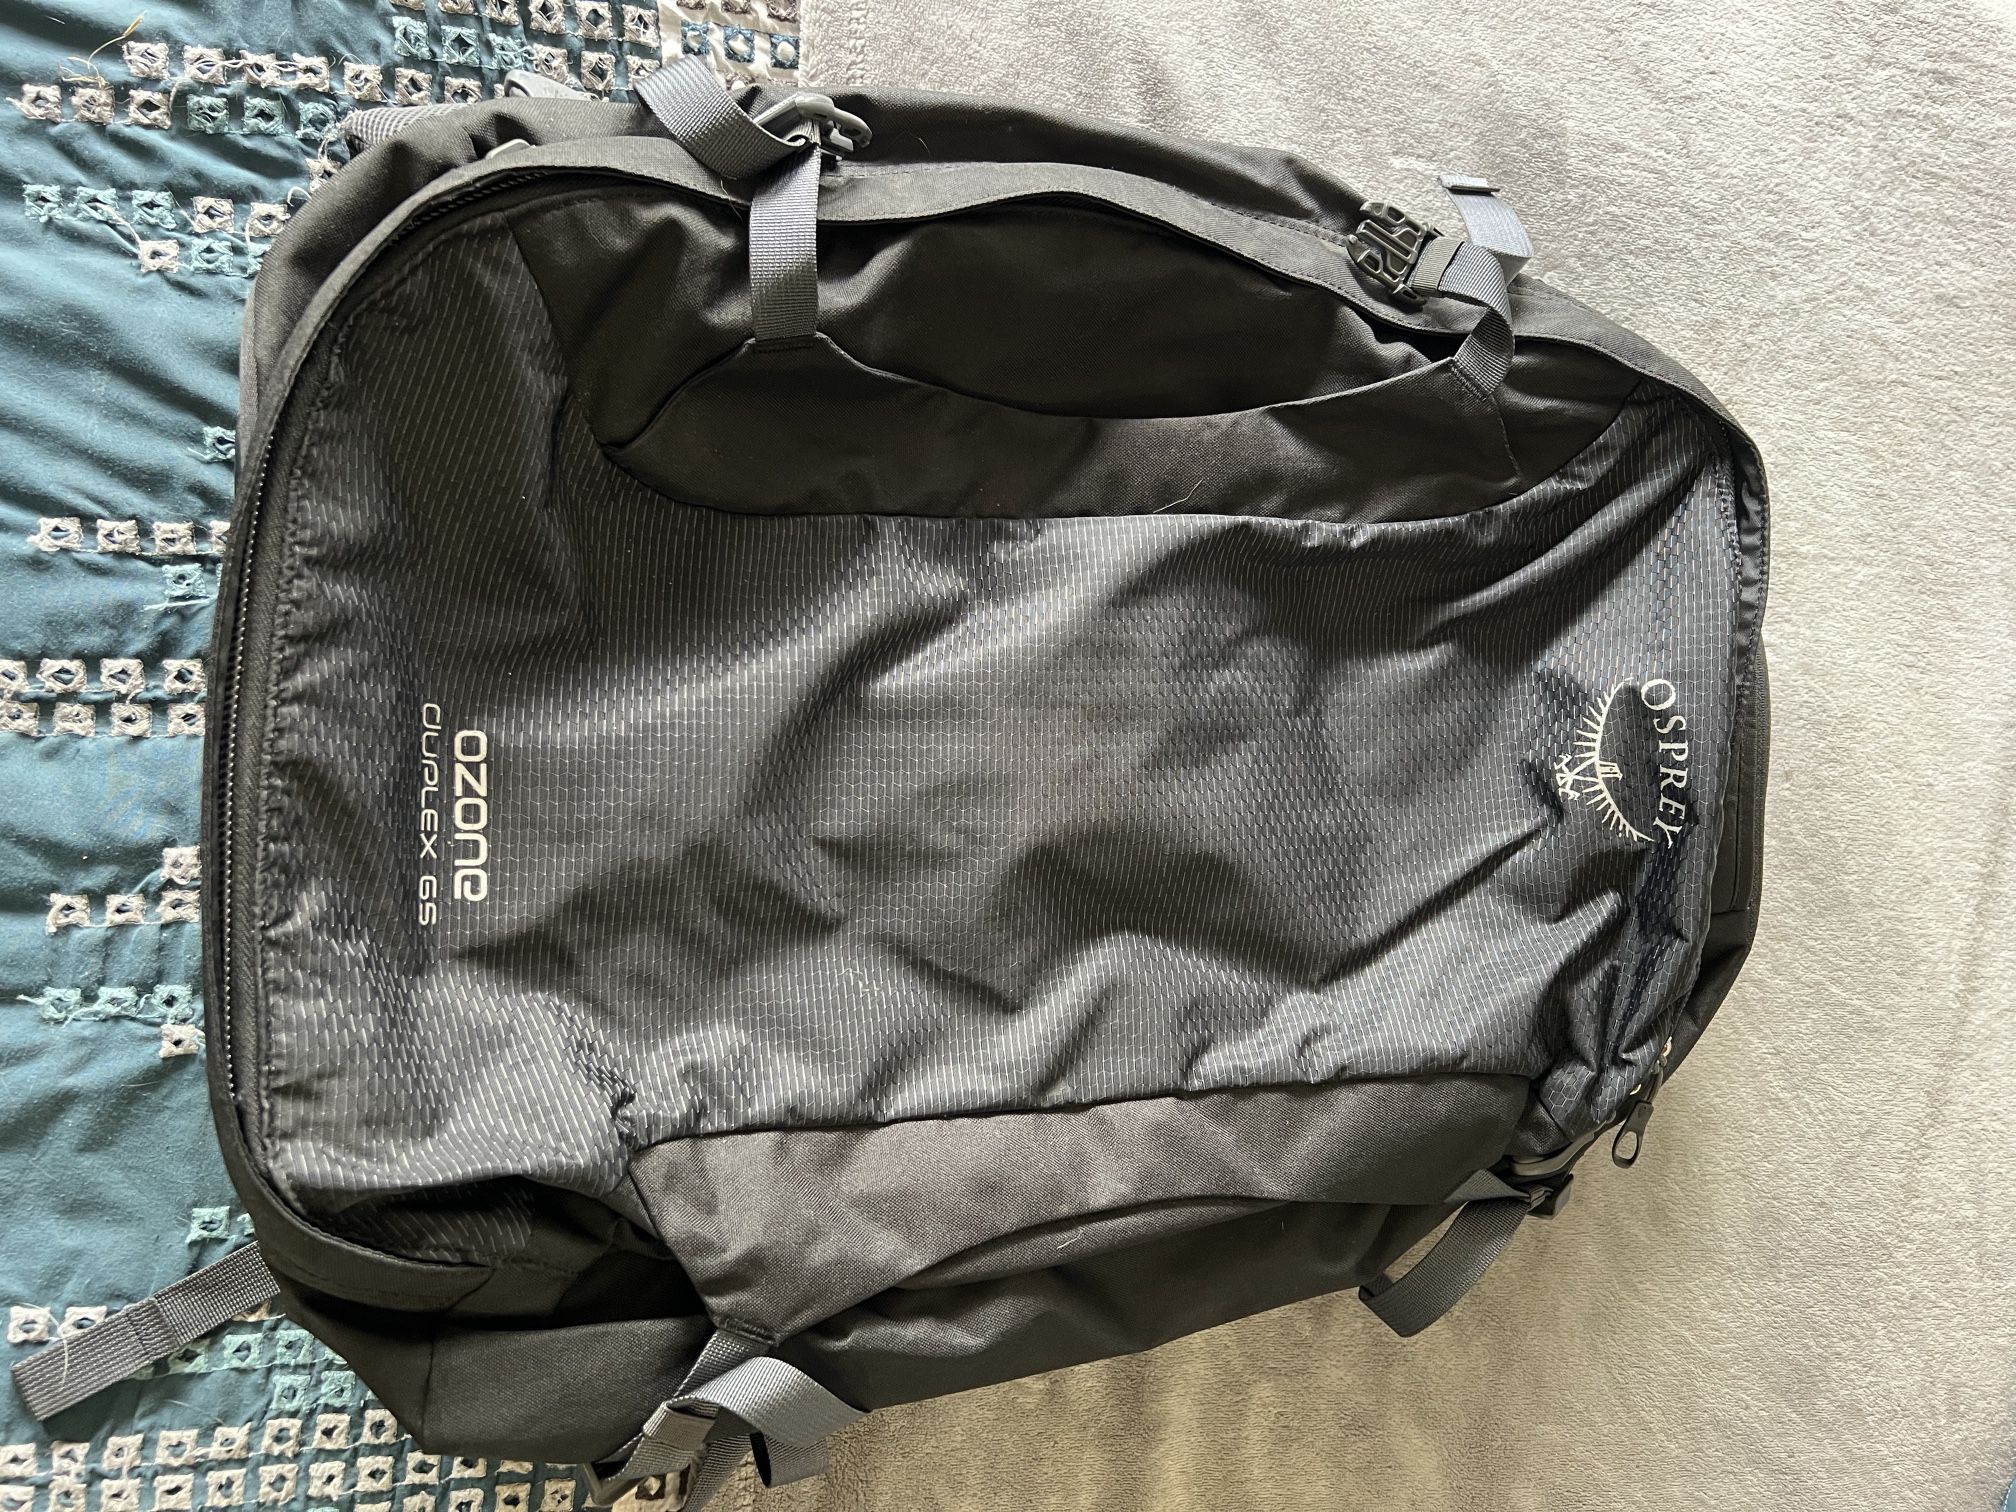 Backpack ~ Black Osprey, Ozone Duplex, 65